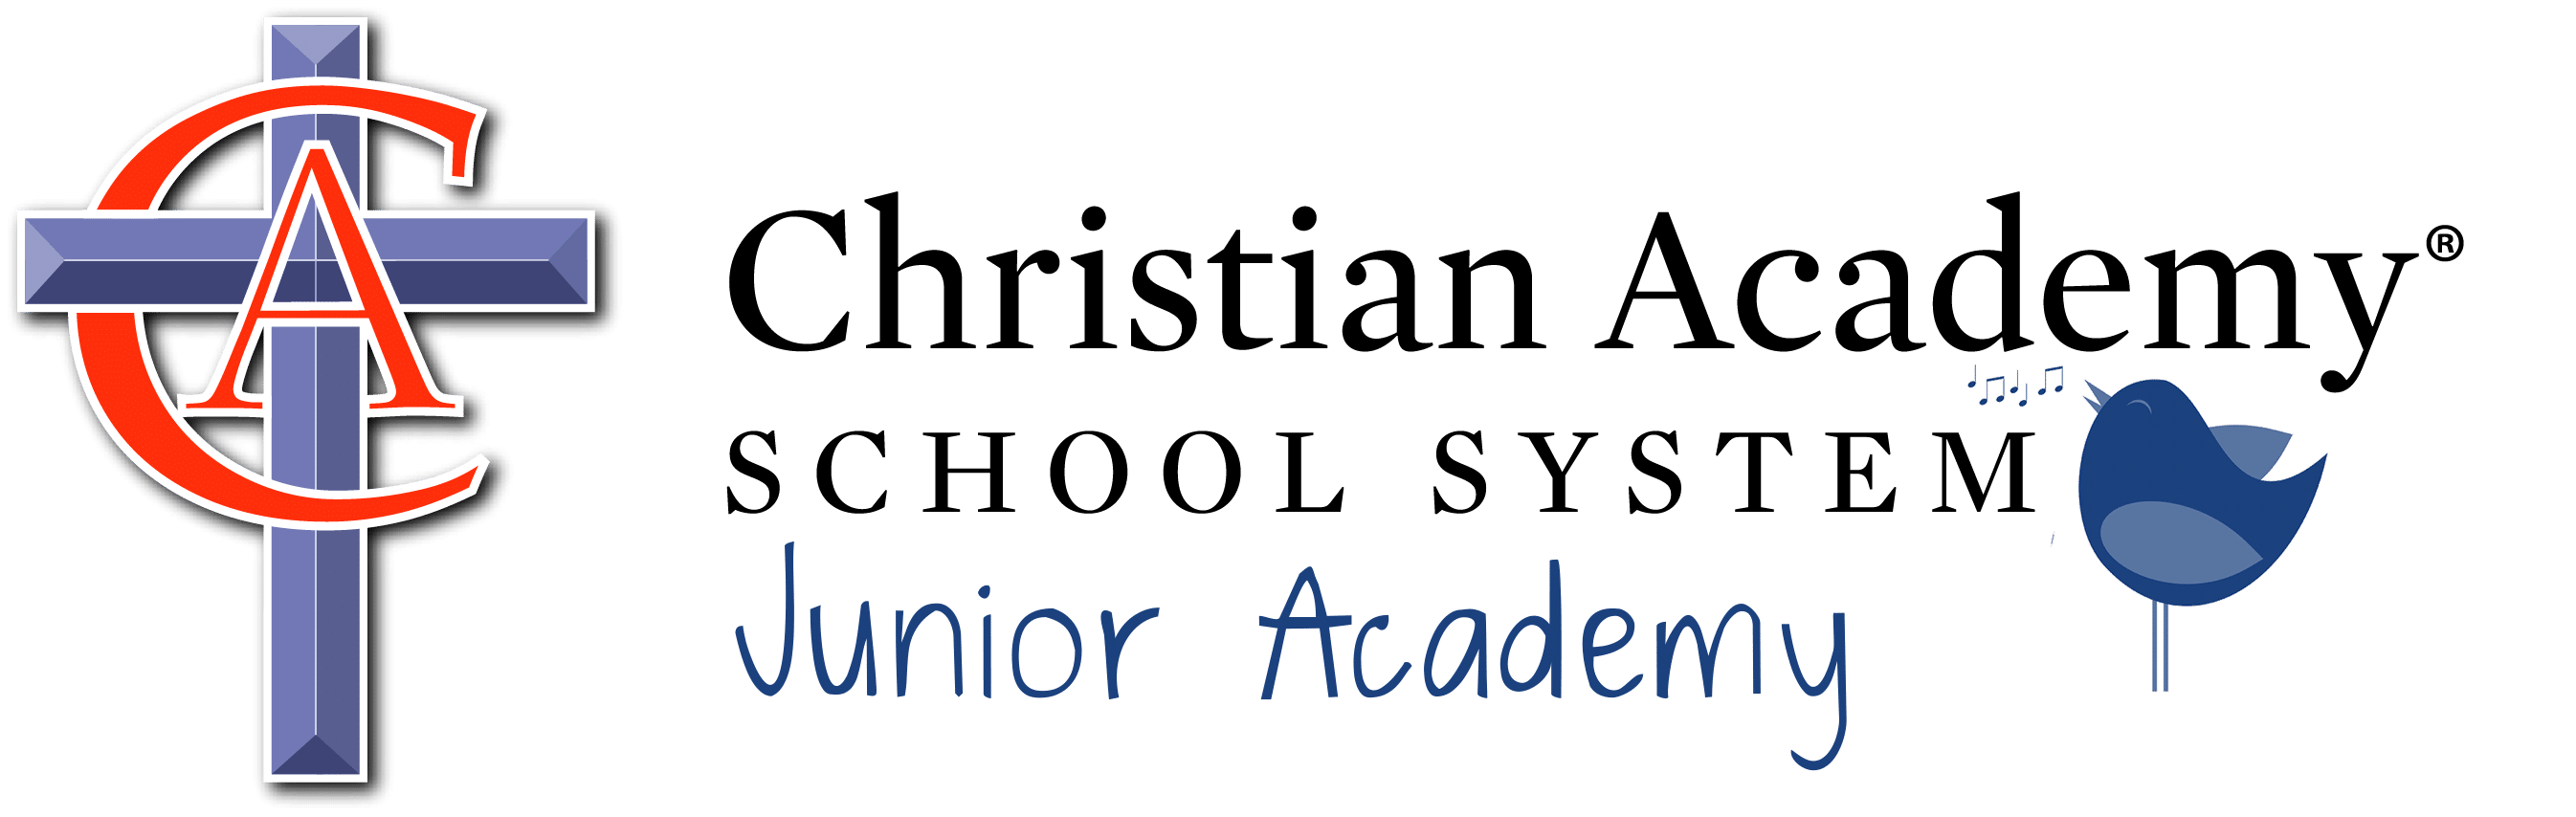 Christian Academy School System | Junior Academy